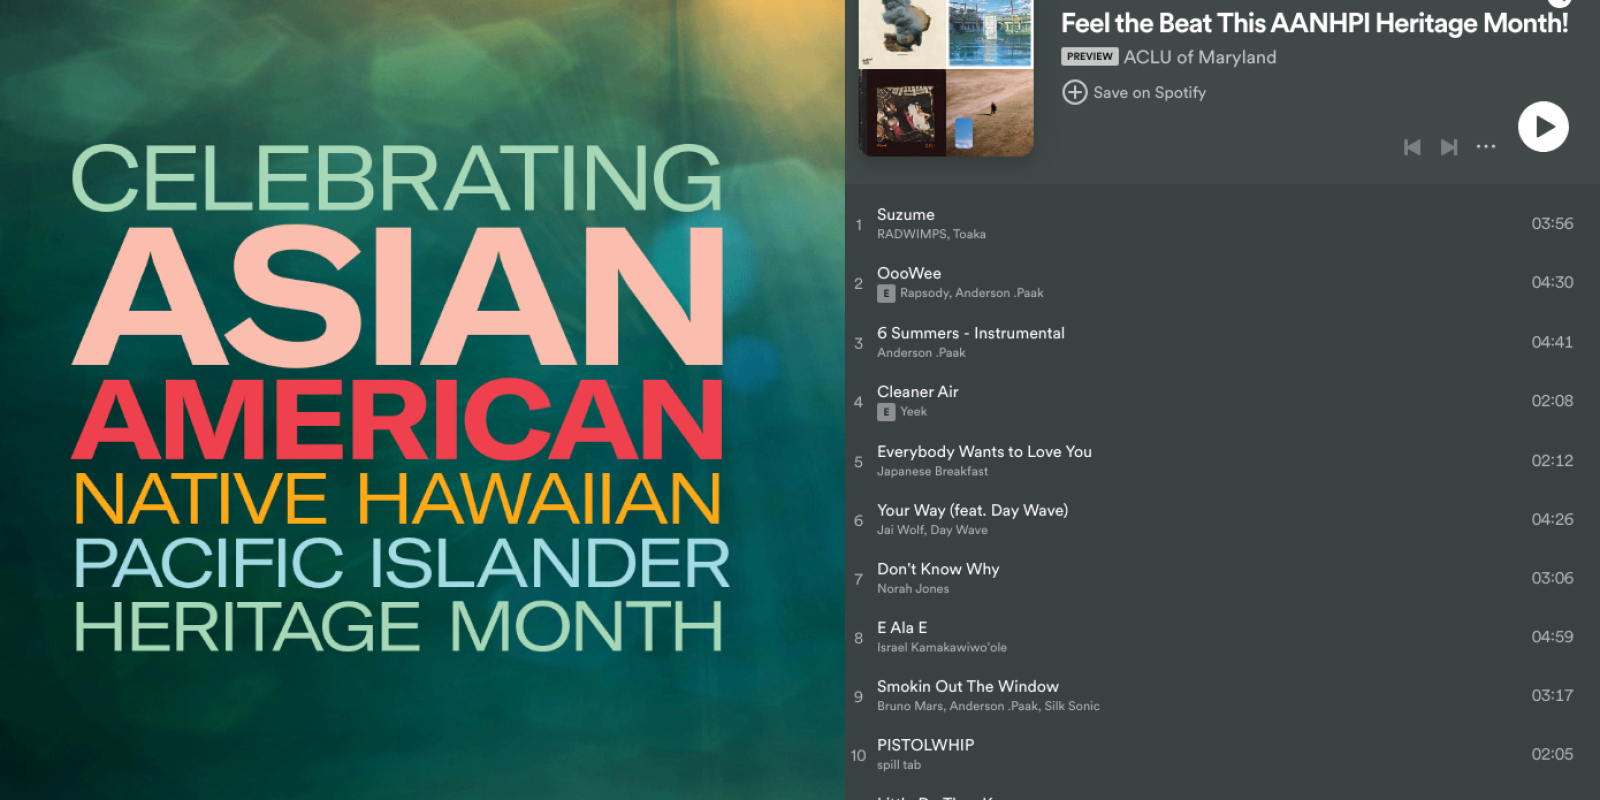 Celebrating Asian American Native Hawaiian Pacific Islander Heritage Month spotify playlist.